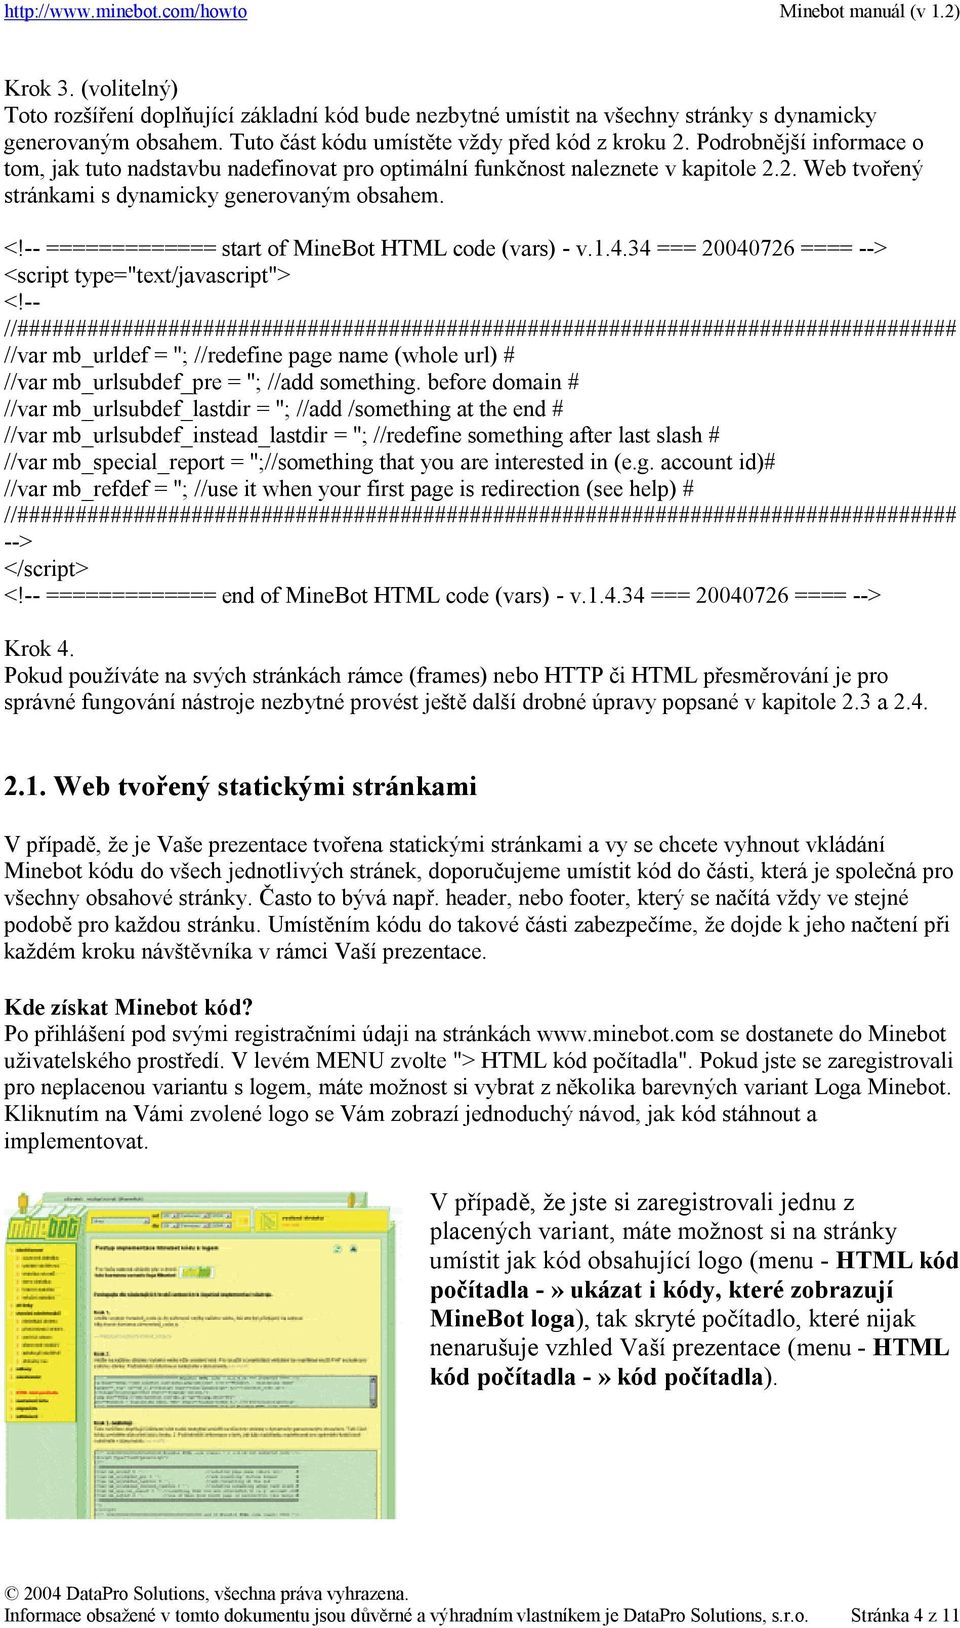 -- ============= start of MineBot HTML code (vars) - v.1.4.34 === 20040726 ==== --> <script type="text/javascript"> <!